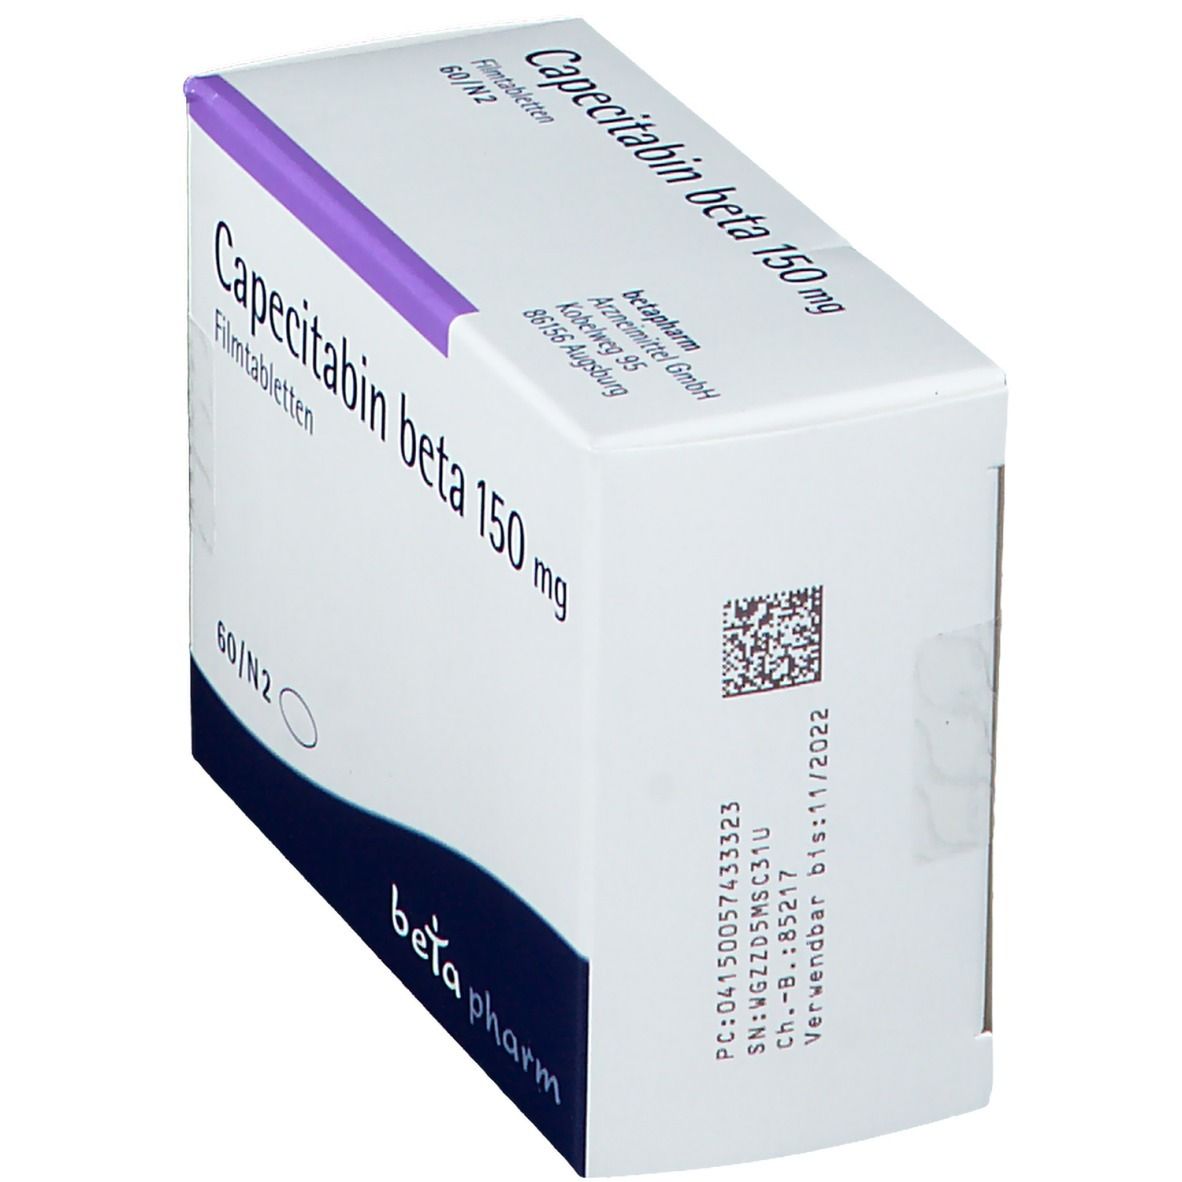 Capecitabin beta 150 mg